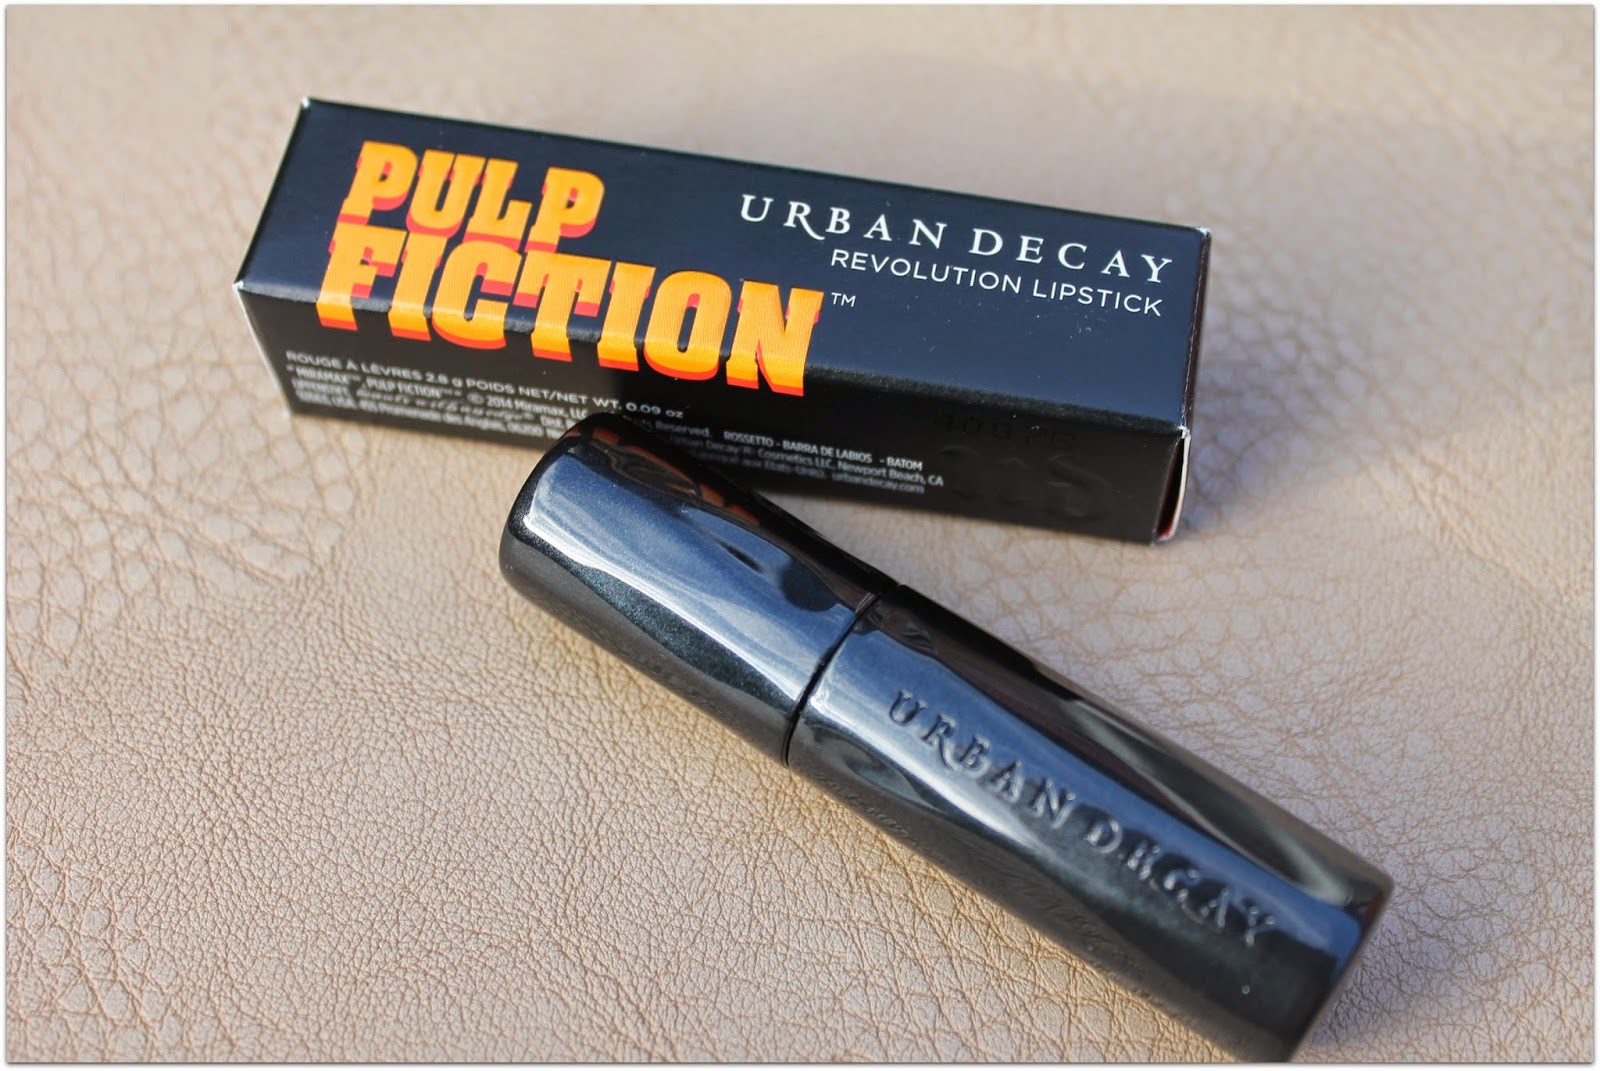 Urban Decay Pulp Fiction Lipstick